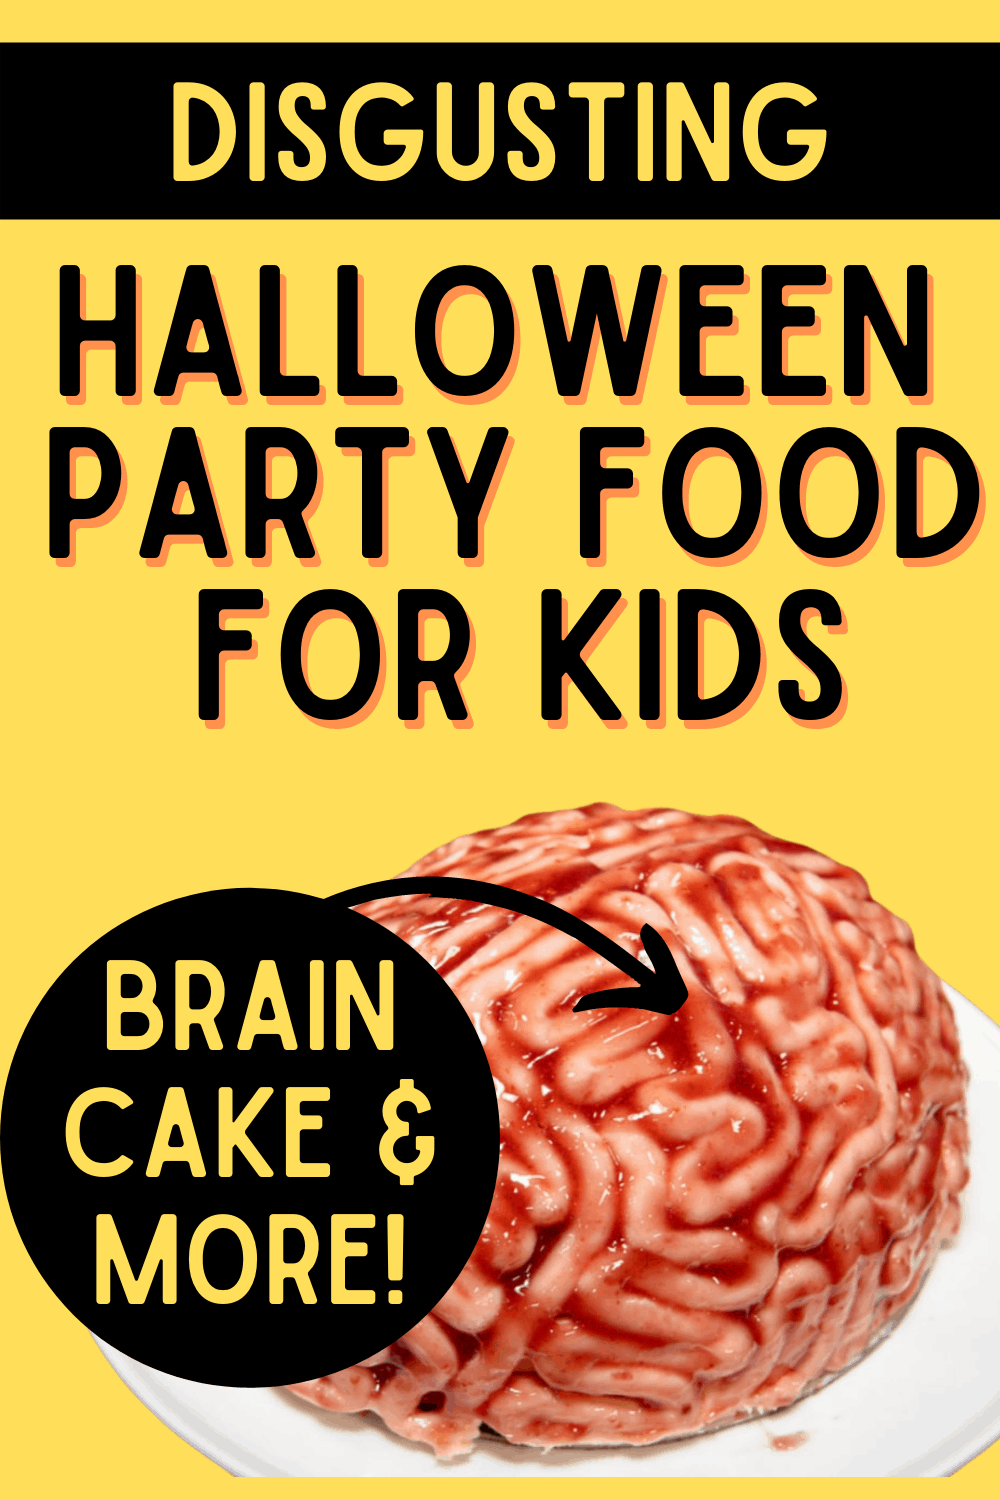 Gross Halloween party food ideas with brain cake